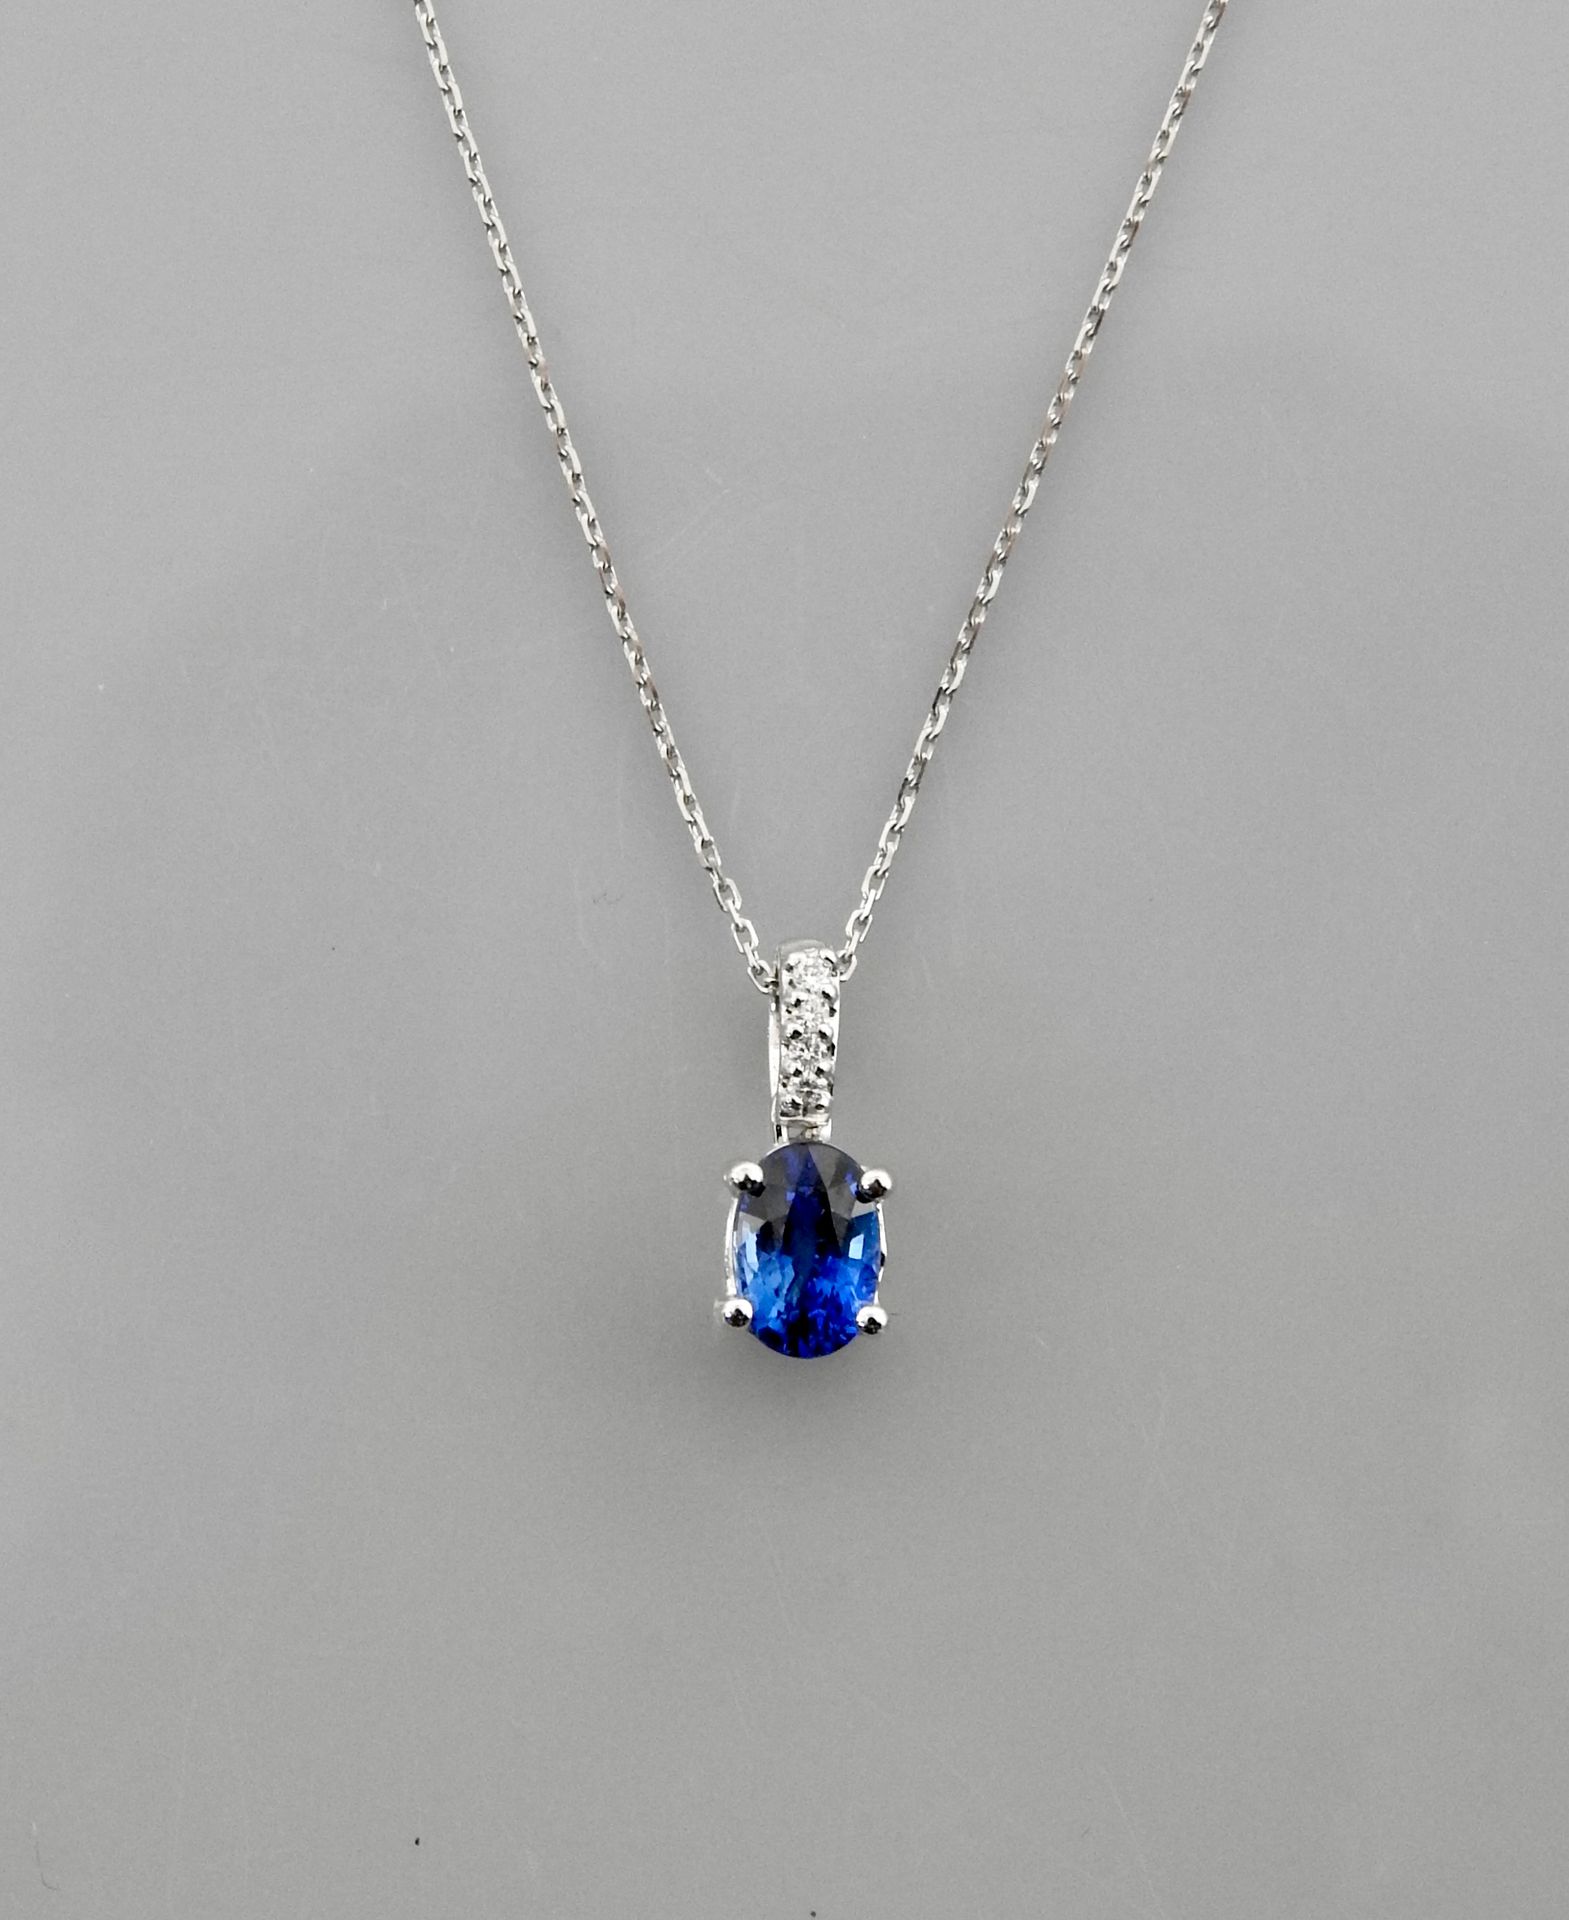 Null 750毫米白金链条和吊坠，镶嵌一颗重1.10克拉的椭圆形蓝宝石和四颗钻石，弹簧扣，长45厘米，重量：2.25克，毛重。